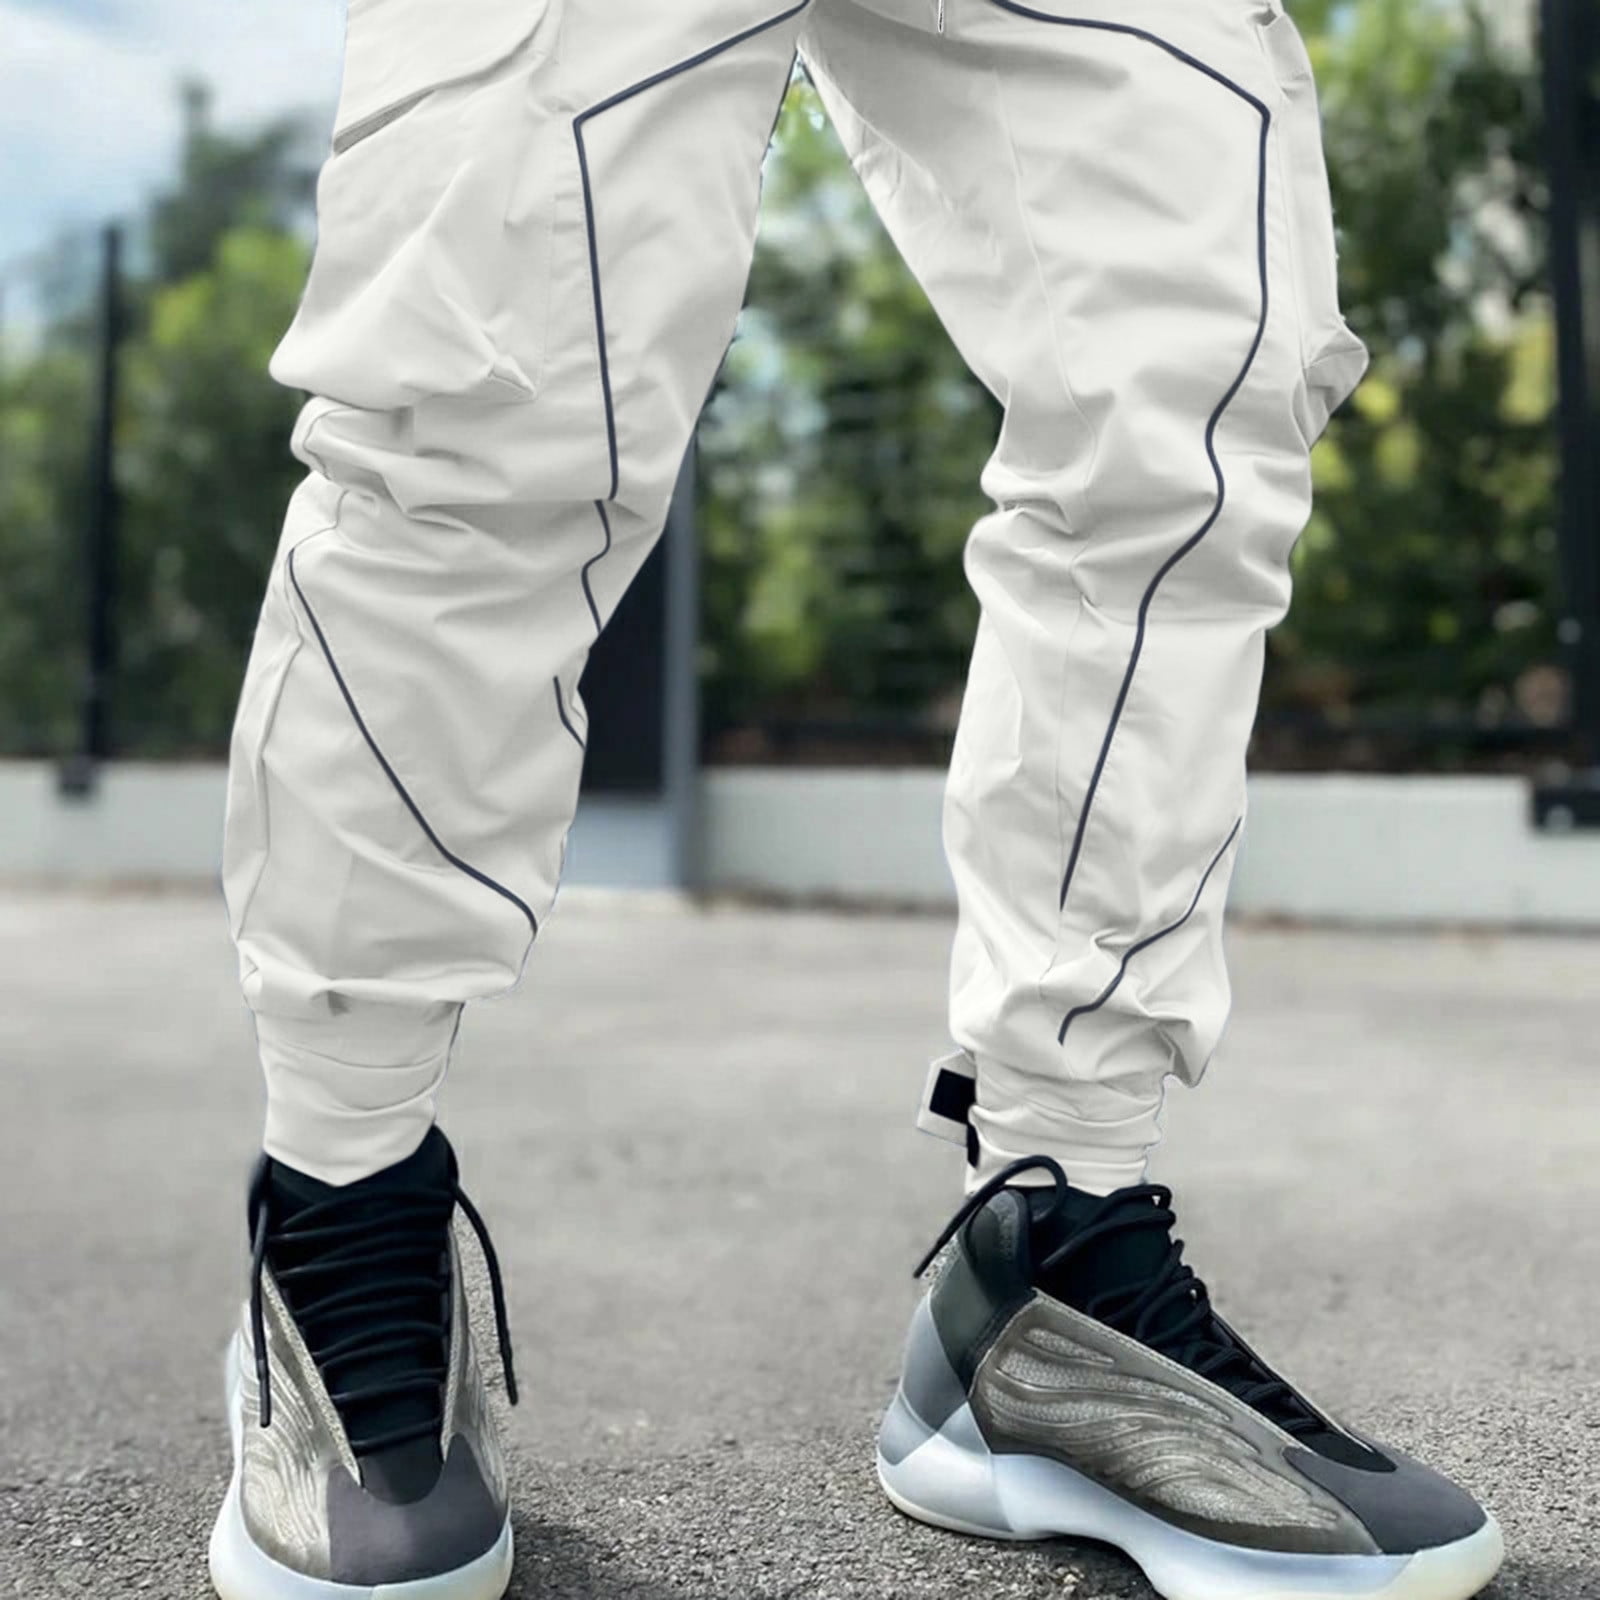 LEEy-world Sweatpants for Men Mens Jogger Sport Pants, Casual Zipper Gym  Workout Sweatpants Pockets Grey,XL 